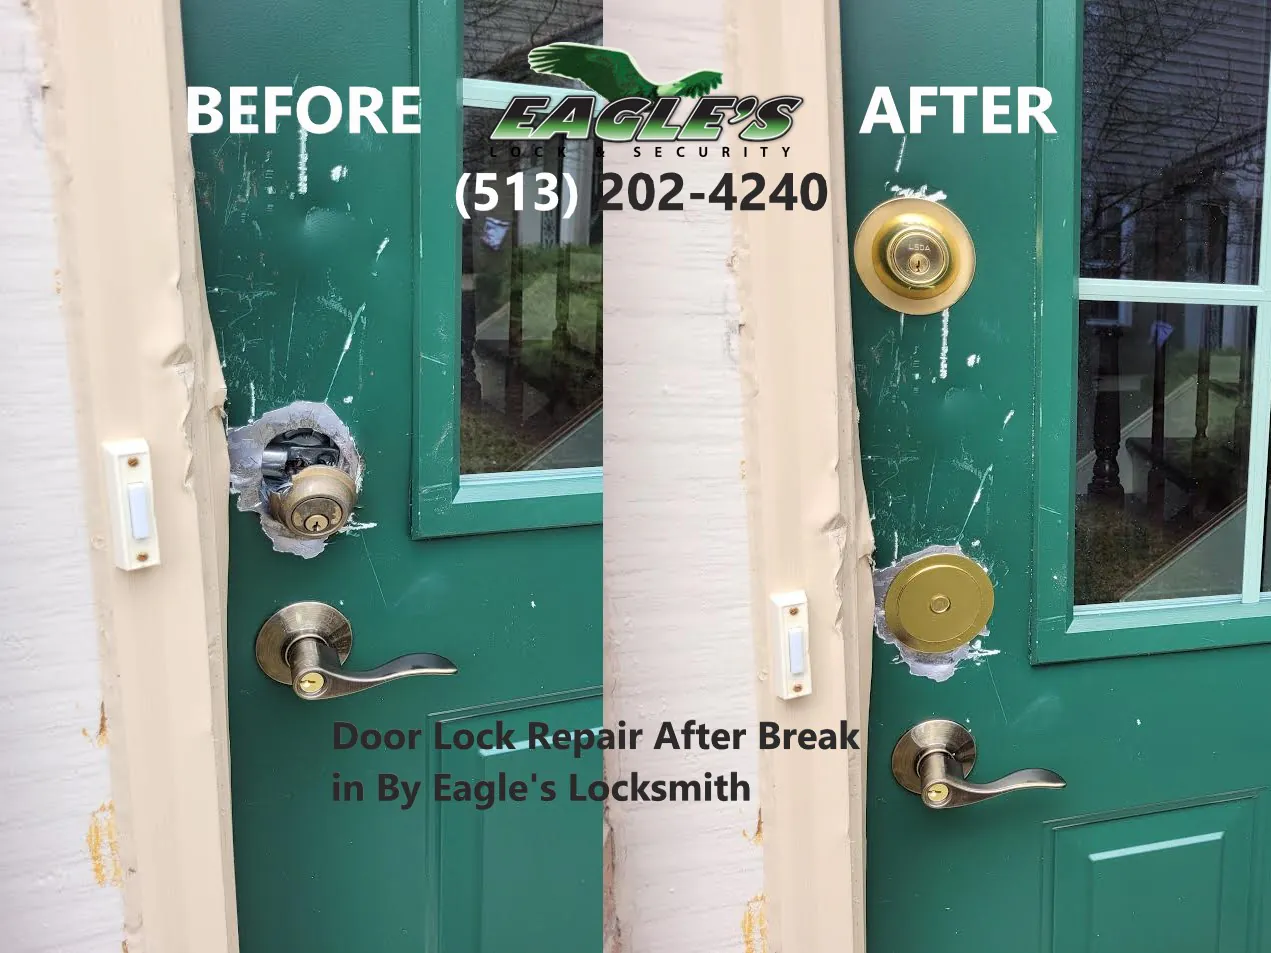 Door Lock Repair After Break in By Eagle's Locksmith